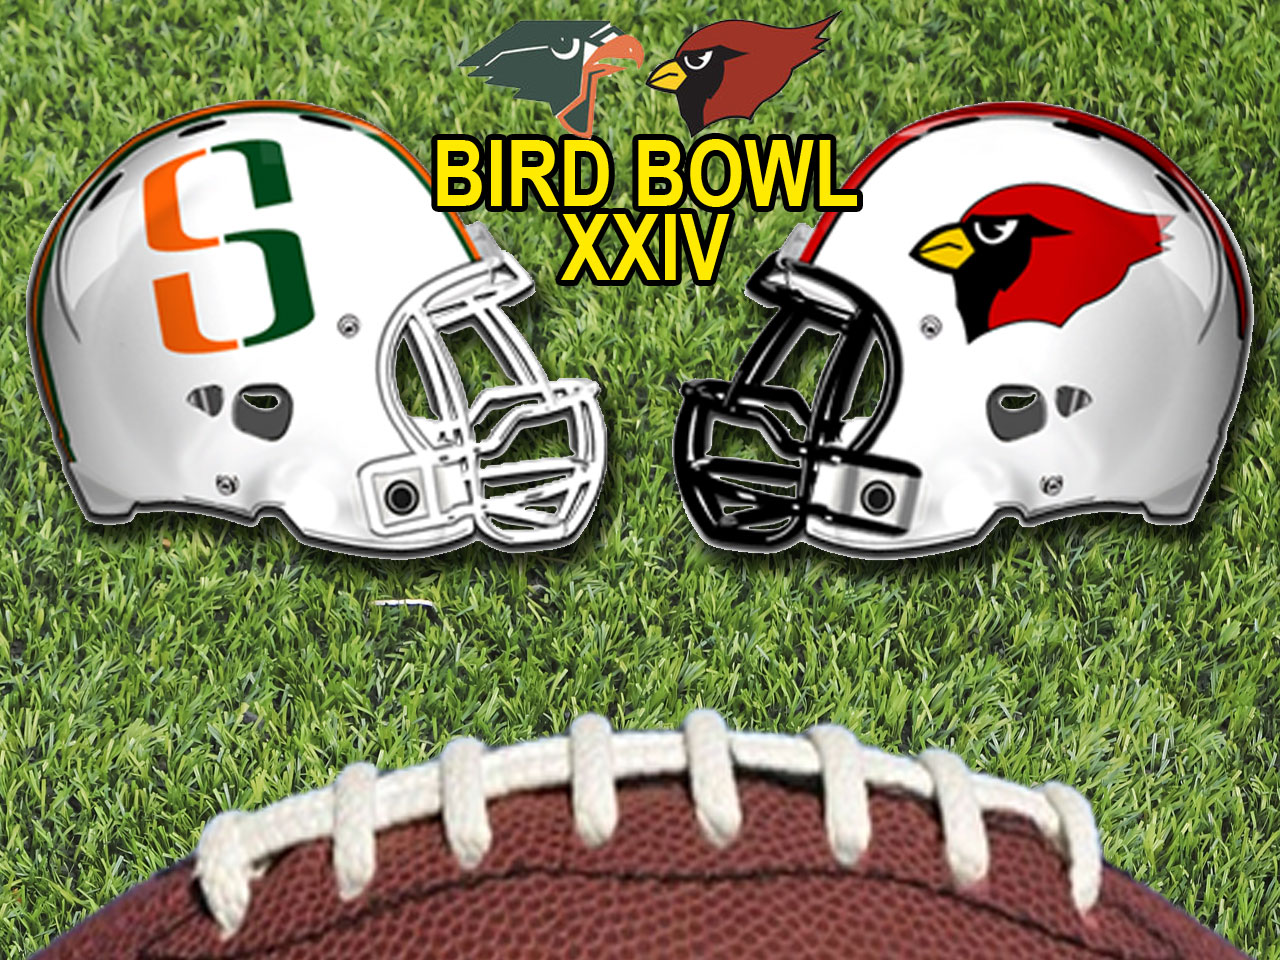 Bird Bowl XXXIV